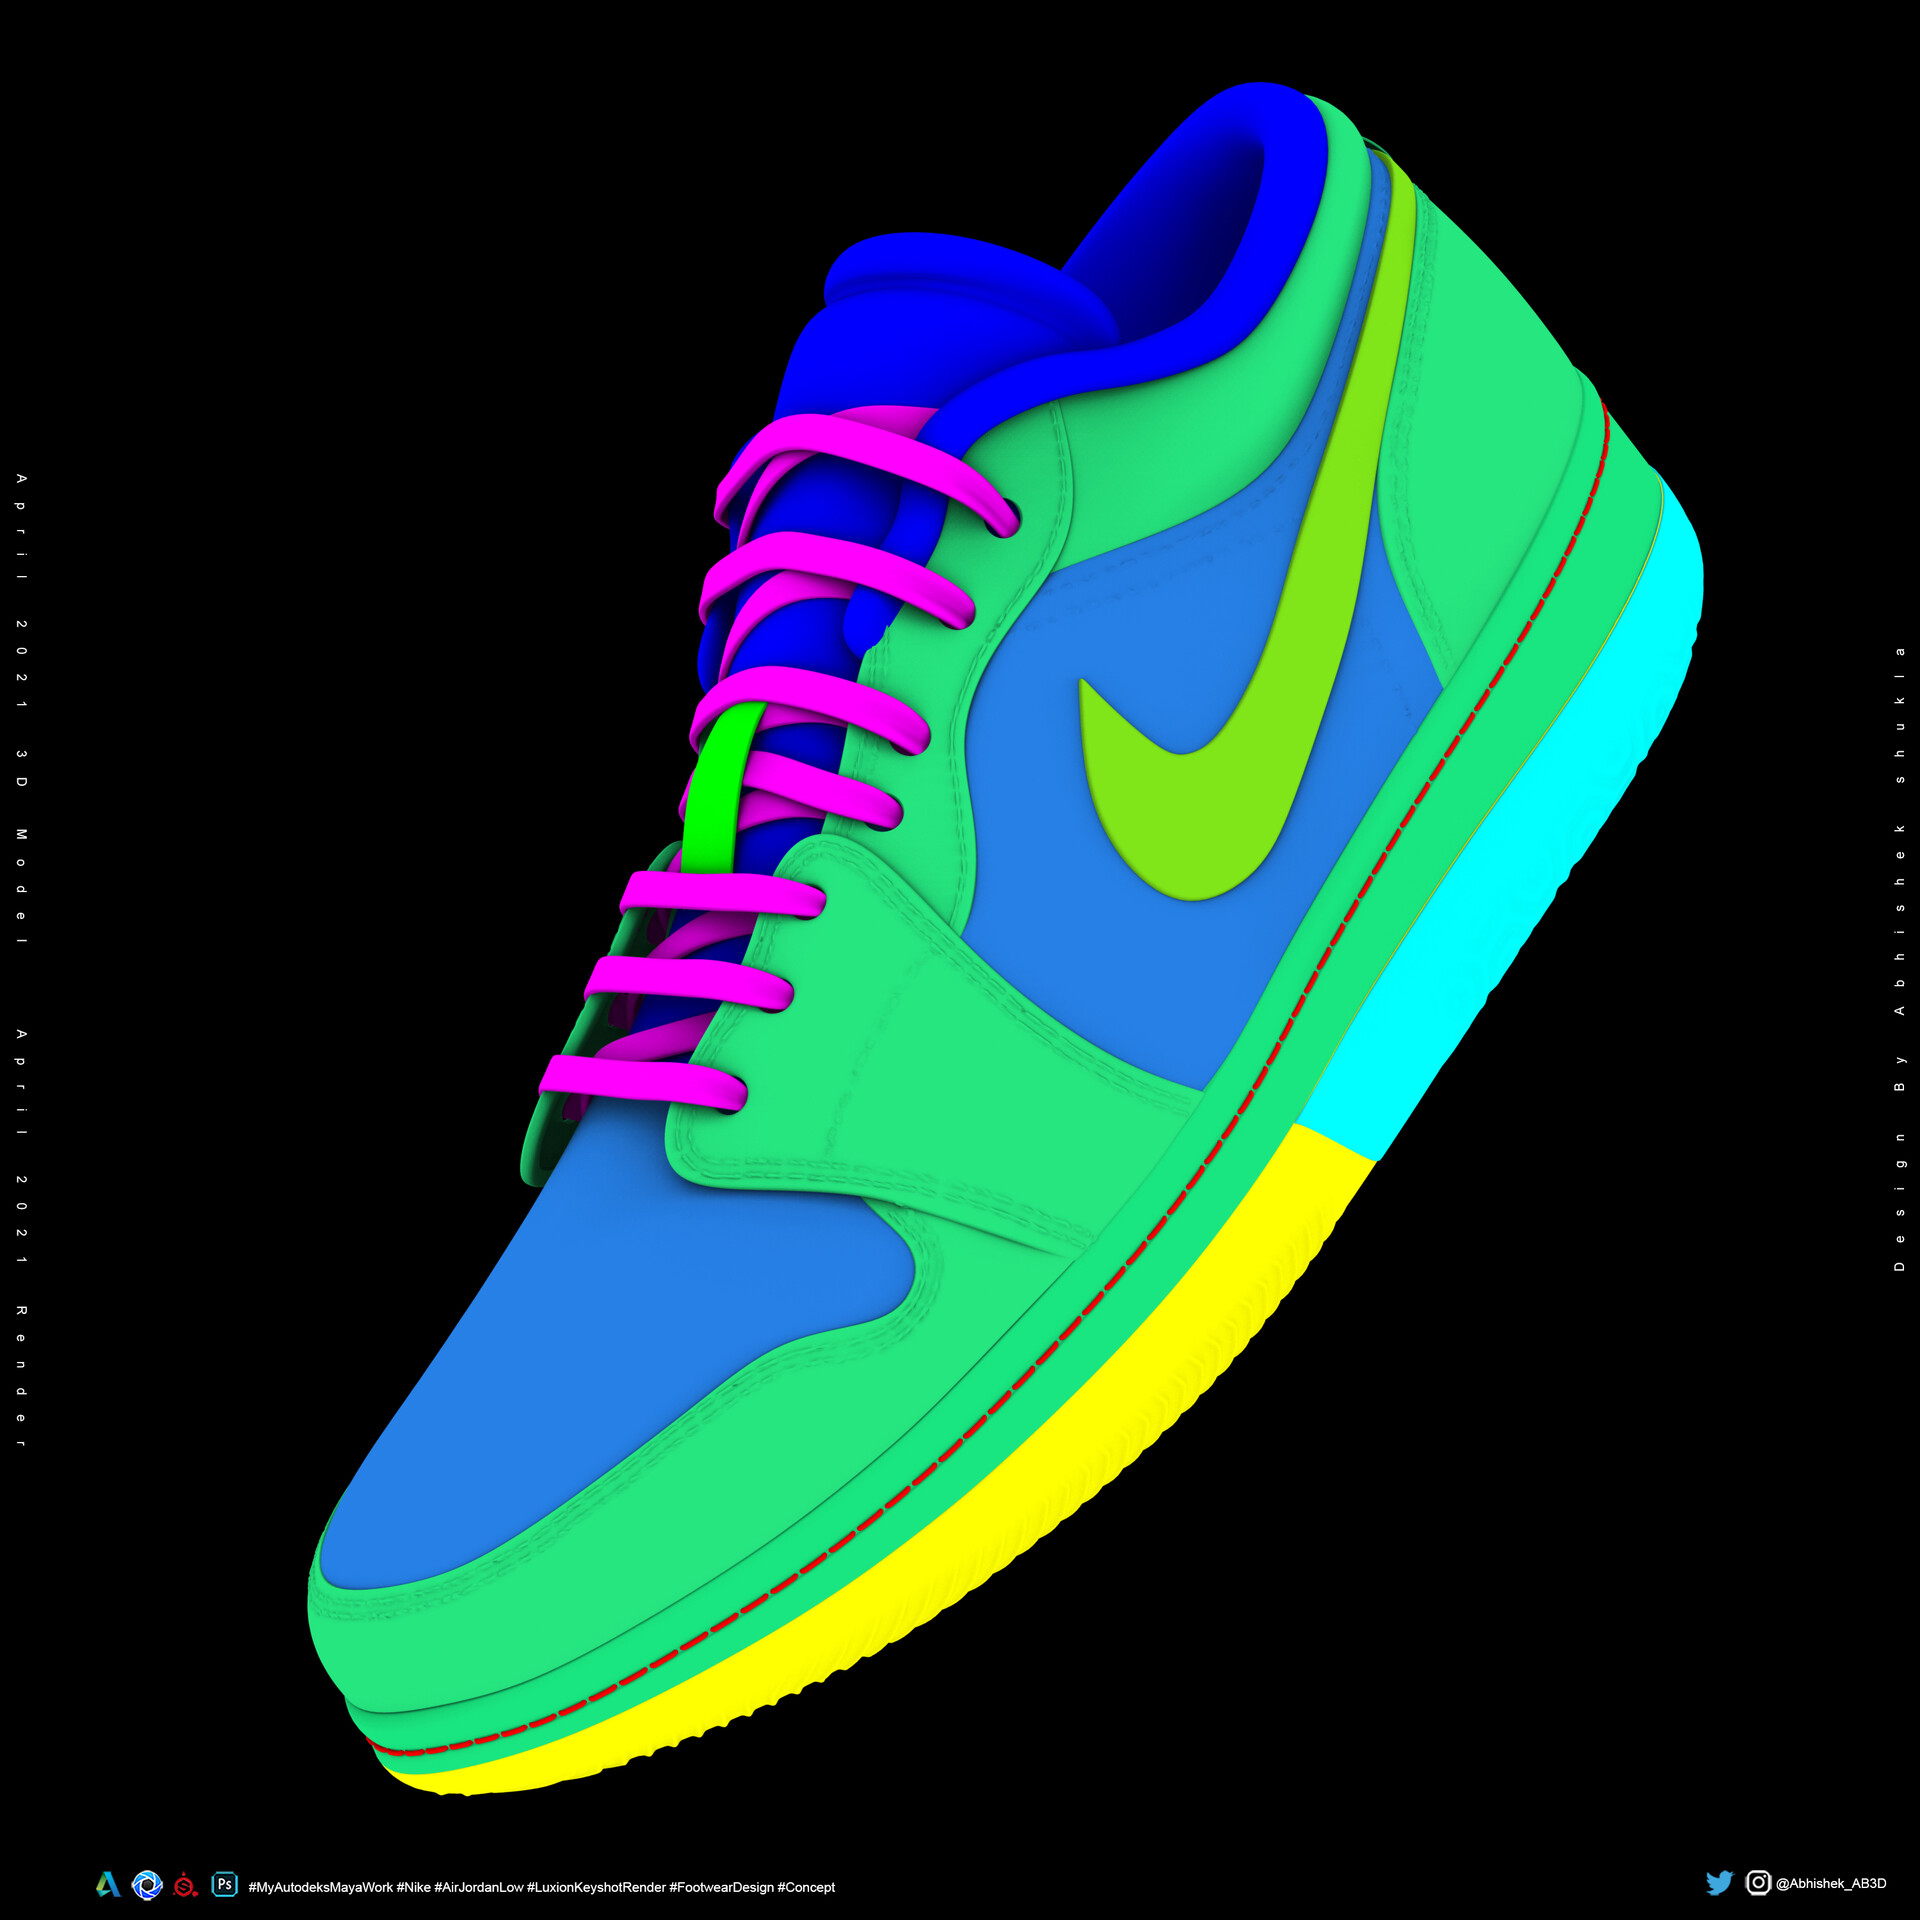 Low Colorway Custom Shoes